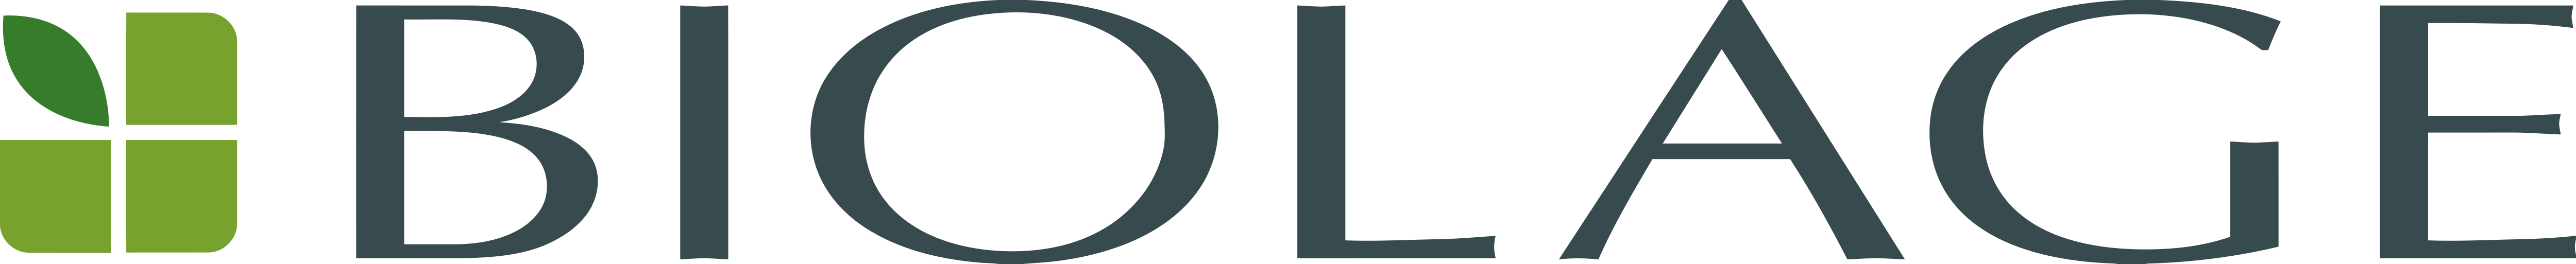 Biolage Logo